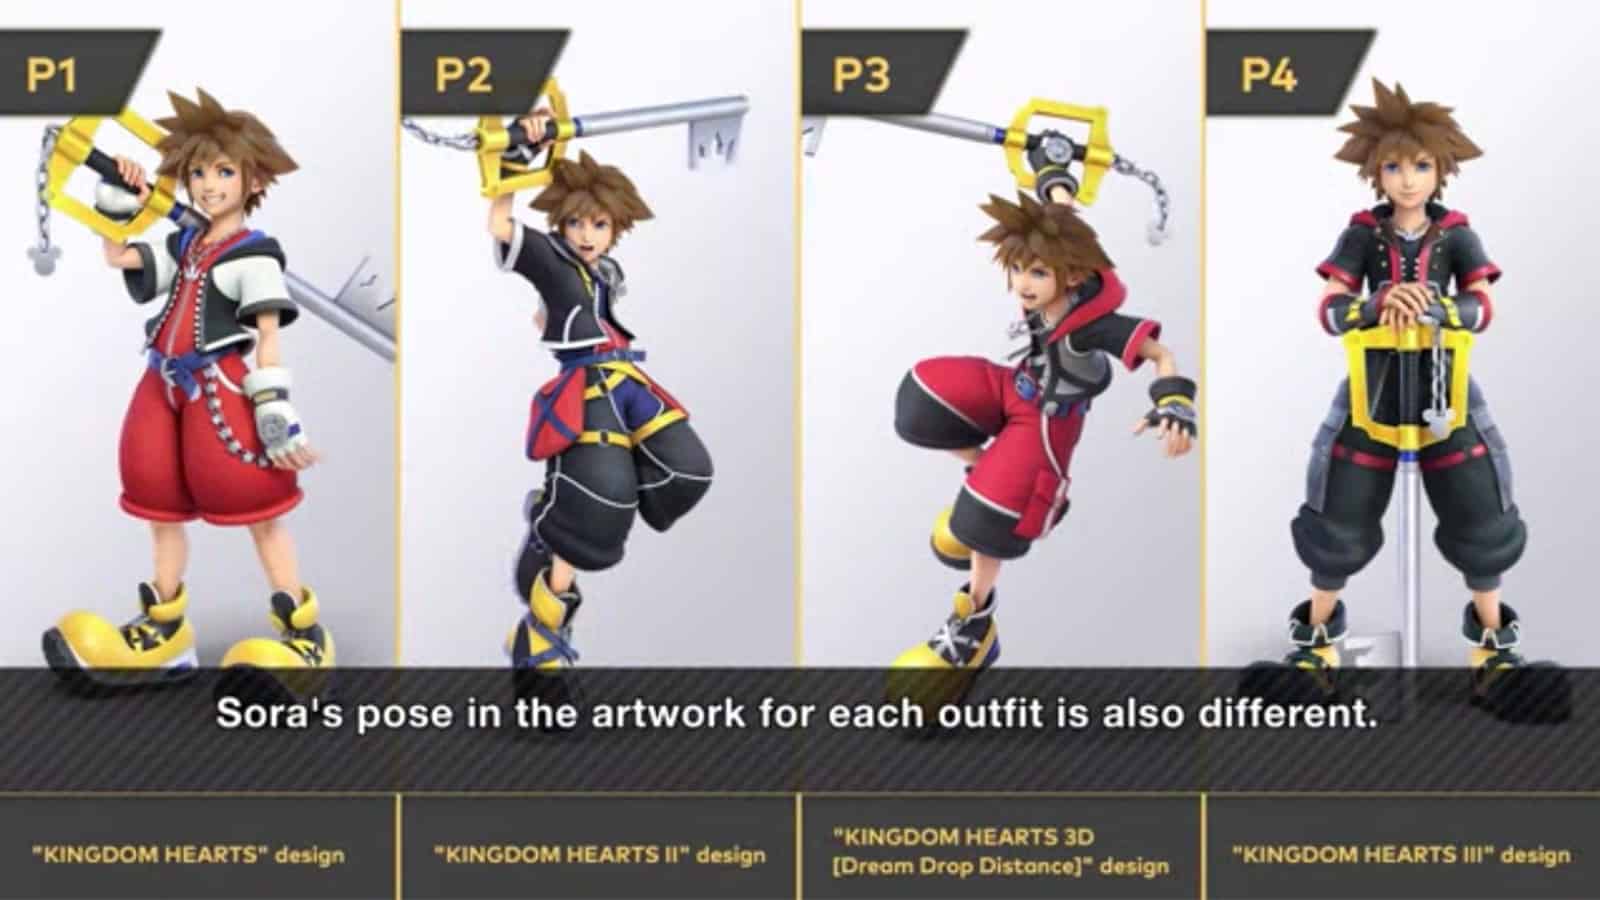 Kingdom Hearts Sora costumes